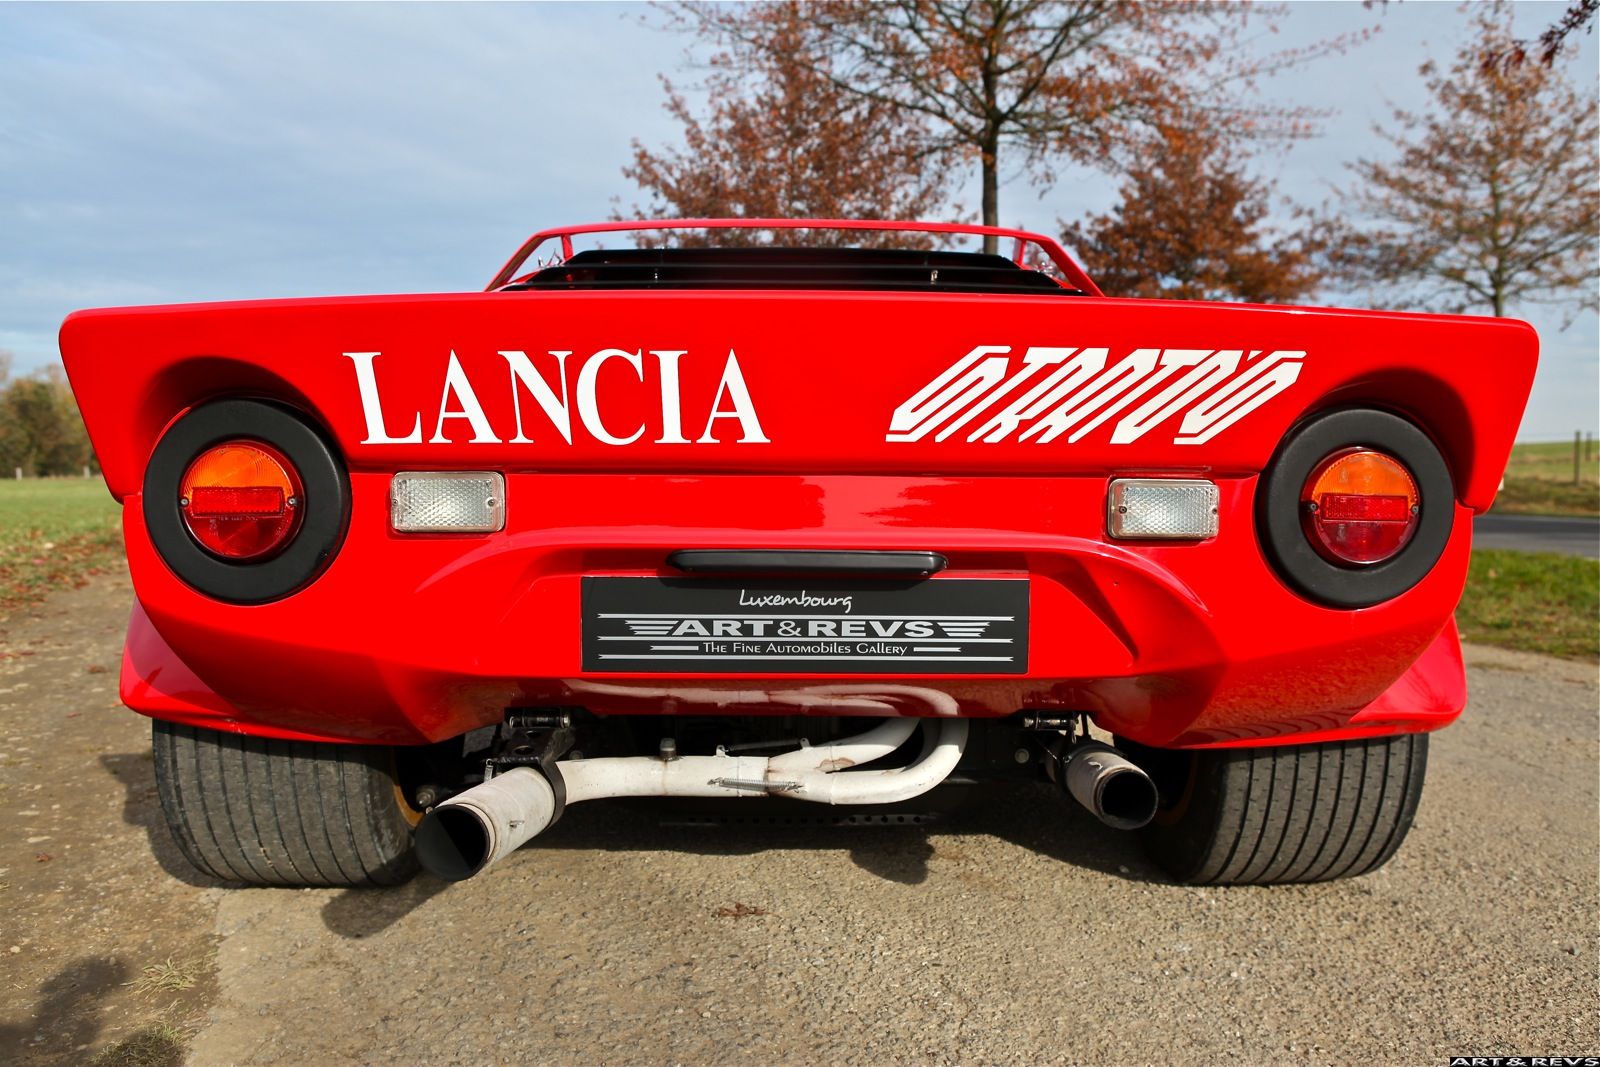 LANCIA Stratos GR4 for sale